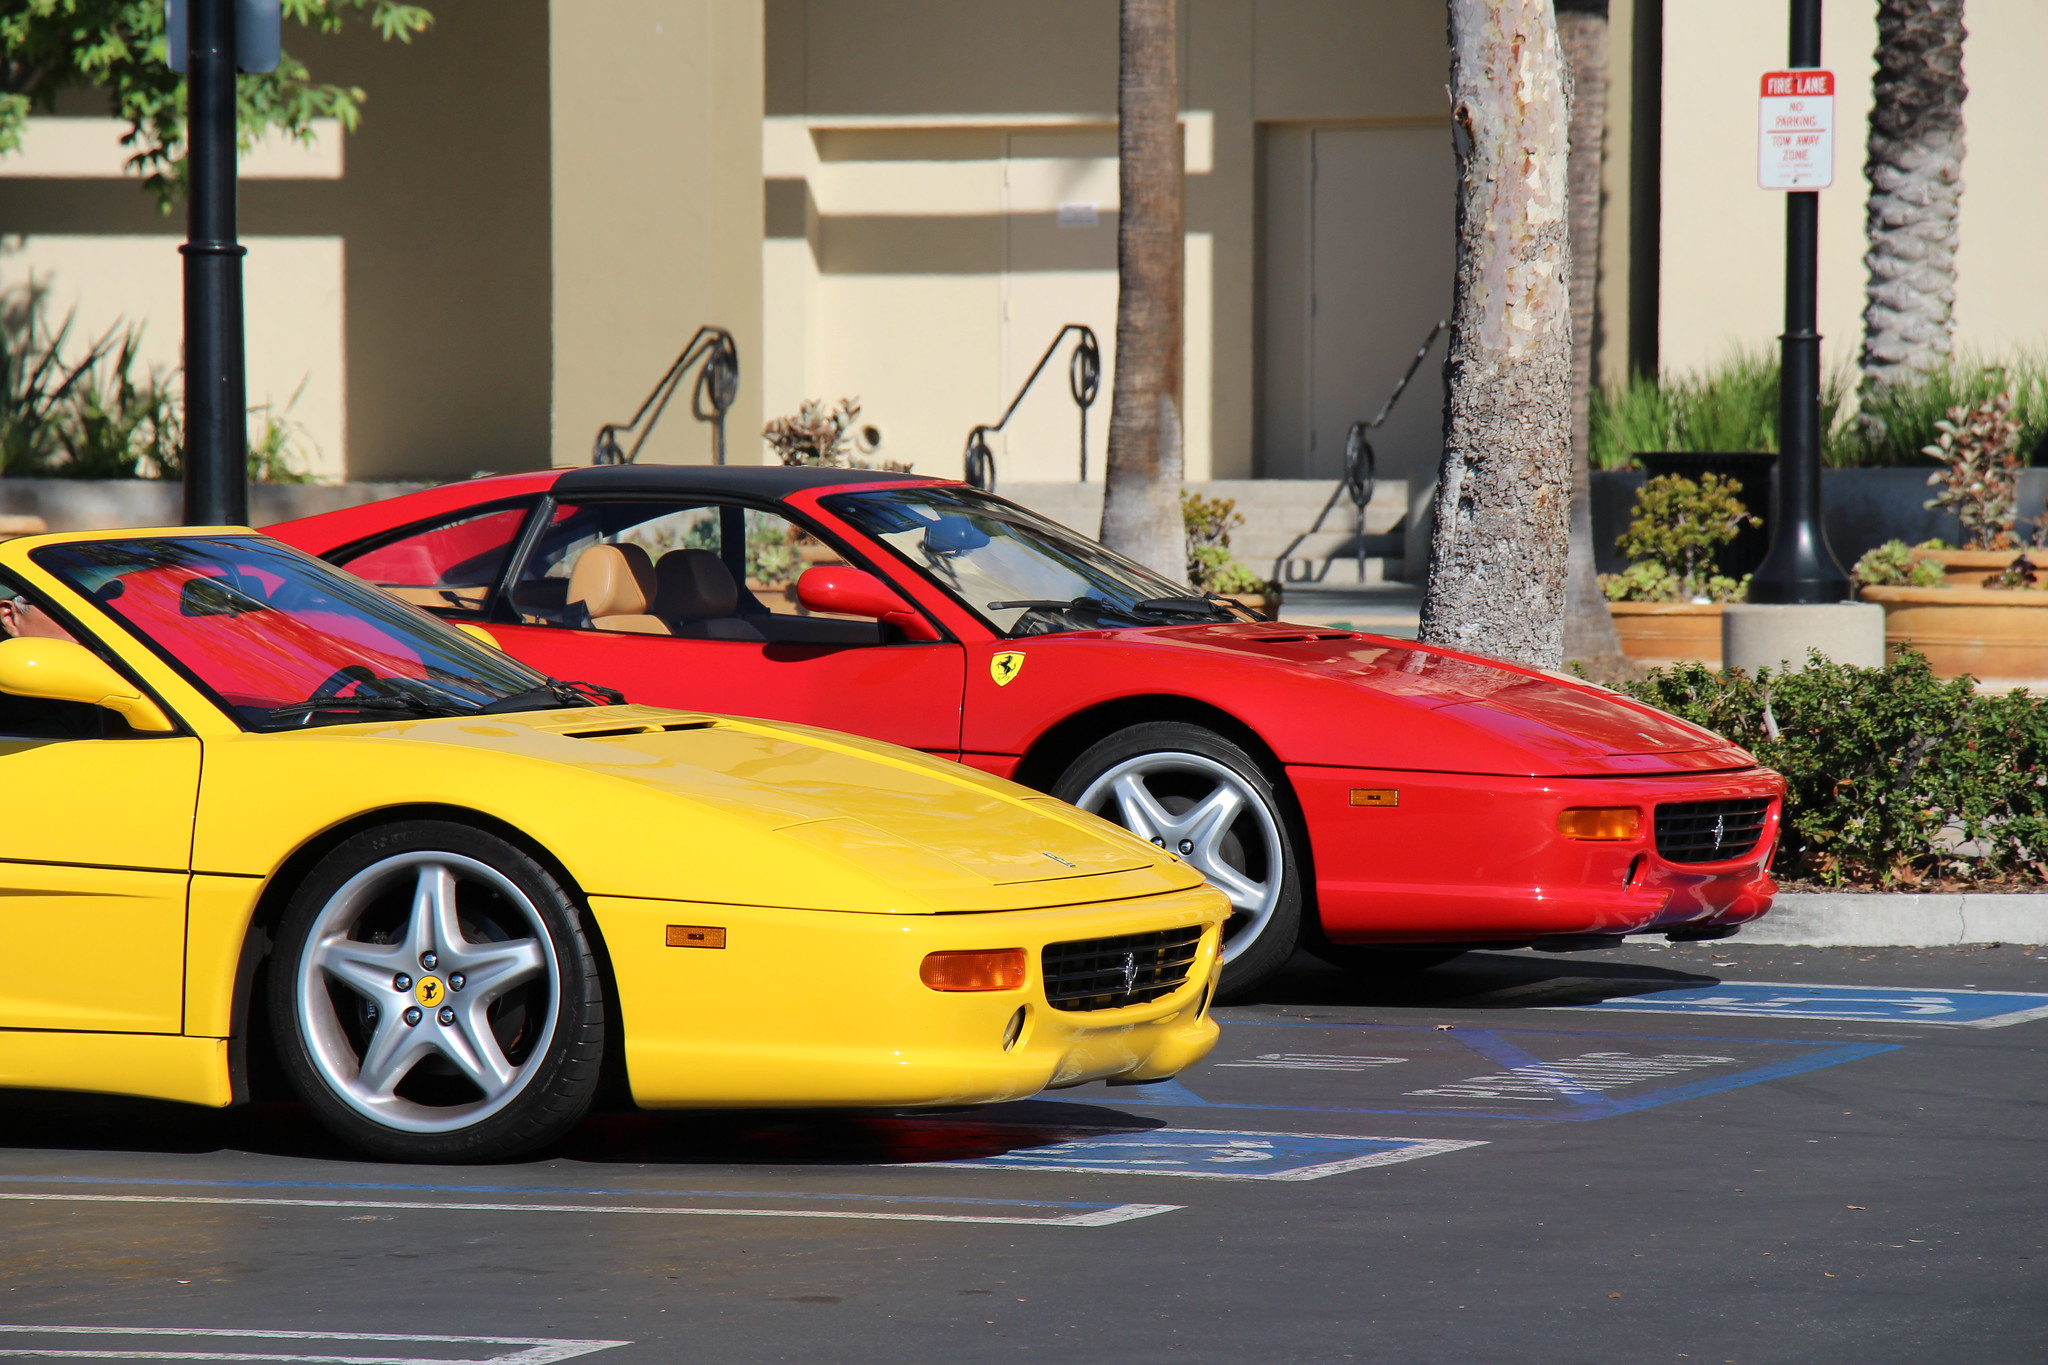 Why is Ferrari restricting Ferrari owners personalizing their car